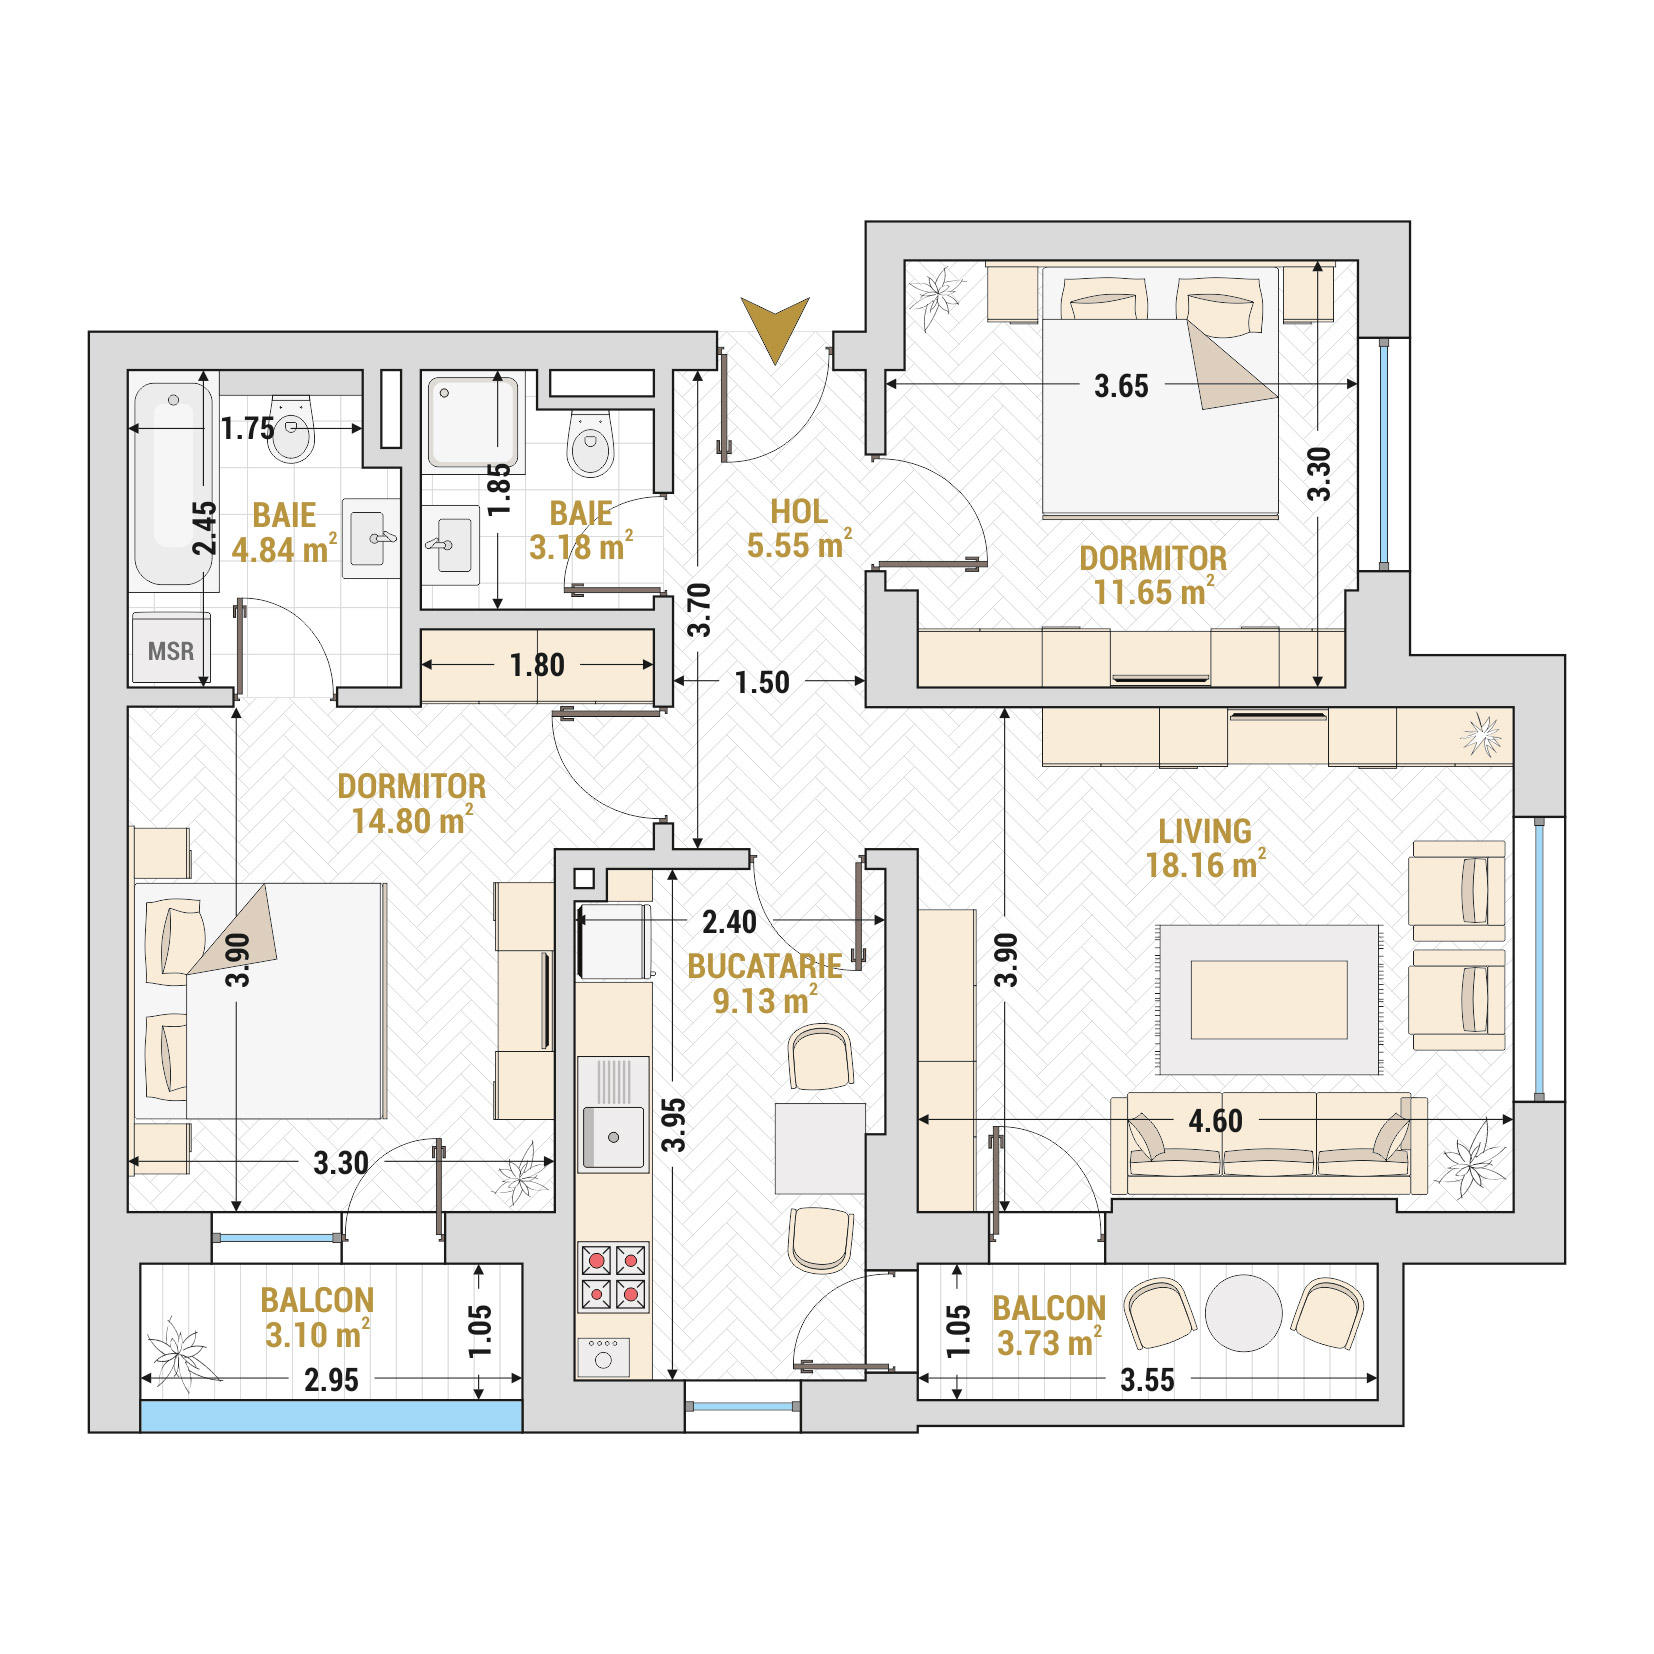 Apartament 3 Camere Tip 1 Corp 1 - Drumul Taberei Residence - Apartamente de vanzare Bucuresti - Suprafata utila totala - 74.14 mp